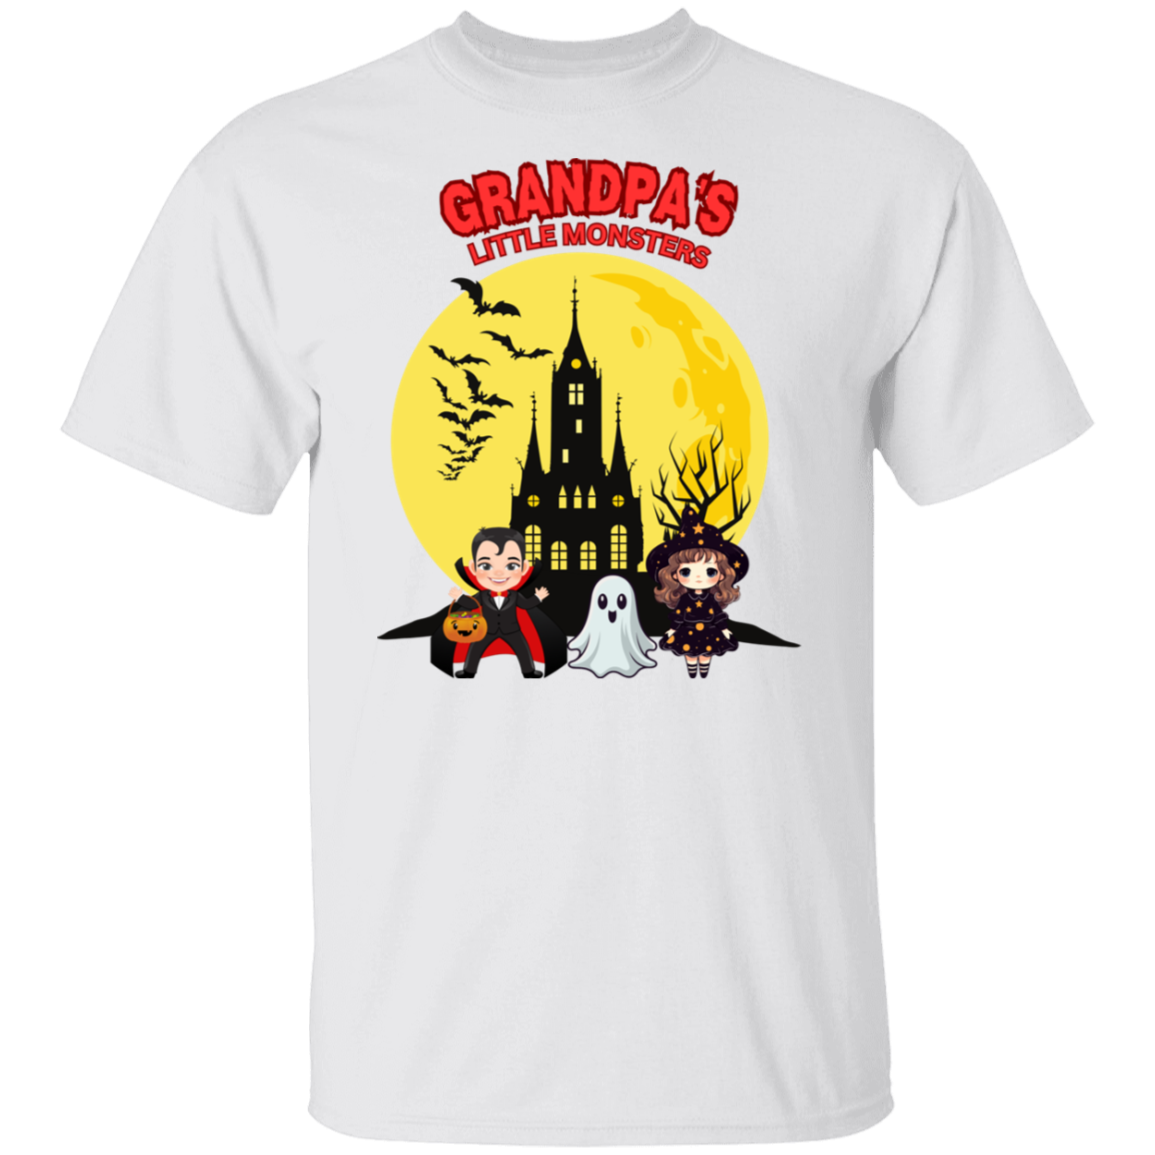 Grandpa's Little Monsters T-Shirt